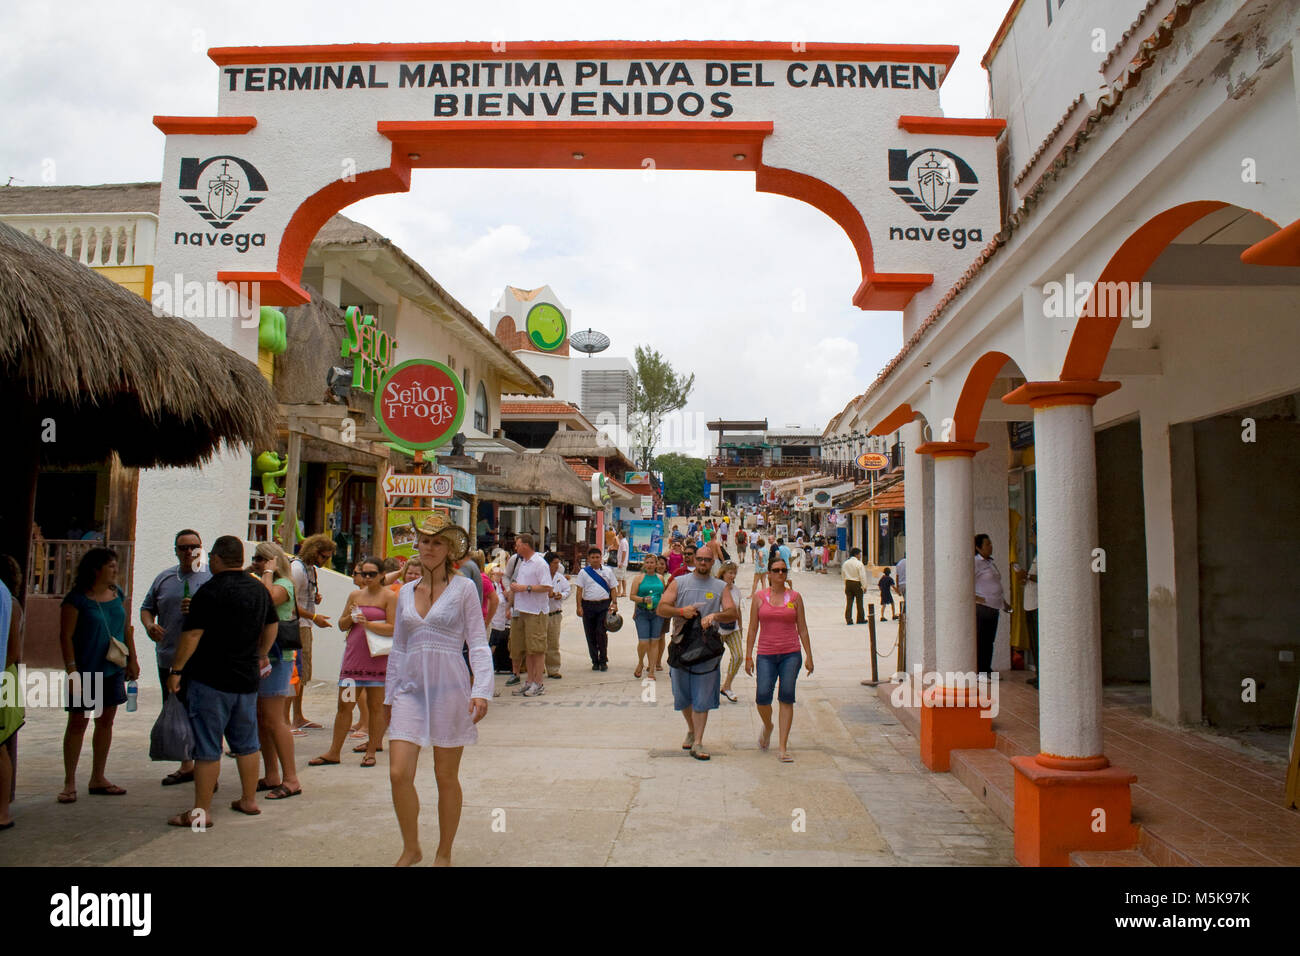 Terminal, Faehre nach Cozumel, Playa del Carmen, Mexique, Caraïbes | Terminal, ferry pour Cozumel, Playa del Carmen, Mexique, Caraïbes Banque D'Images